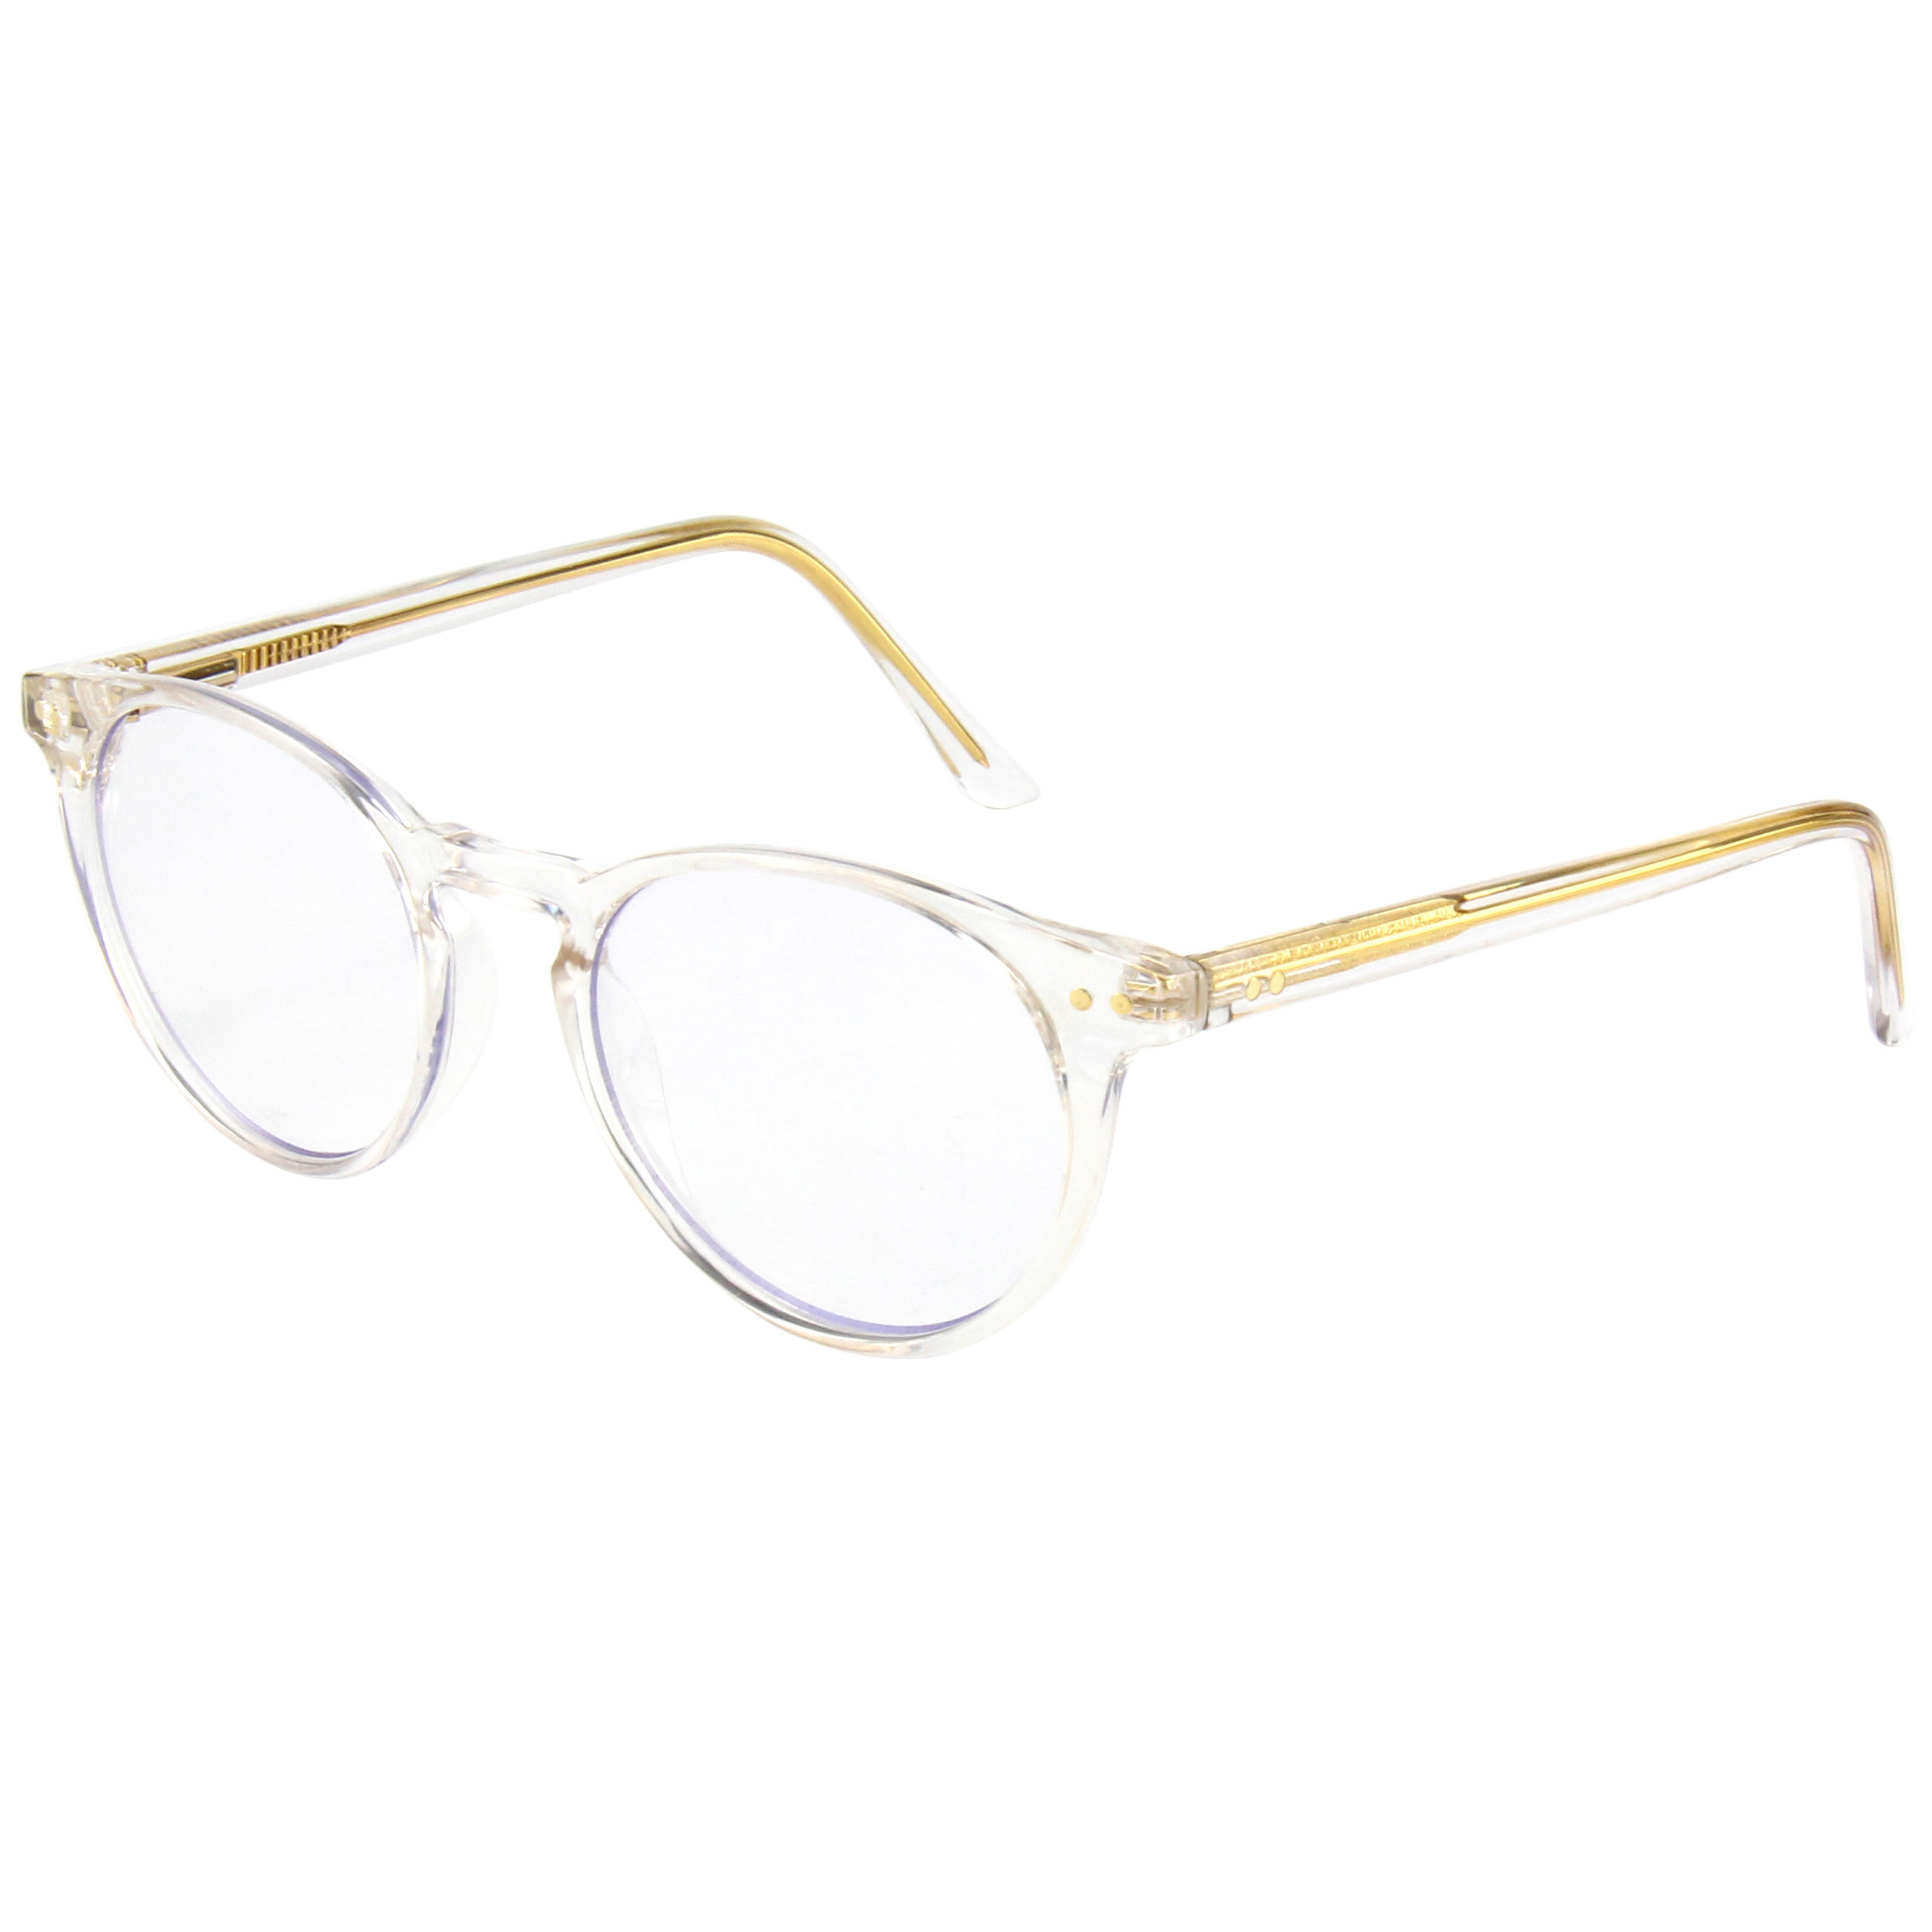 Eugenia optical glasses wholesale overseas market for Eye Protection-2